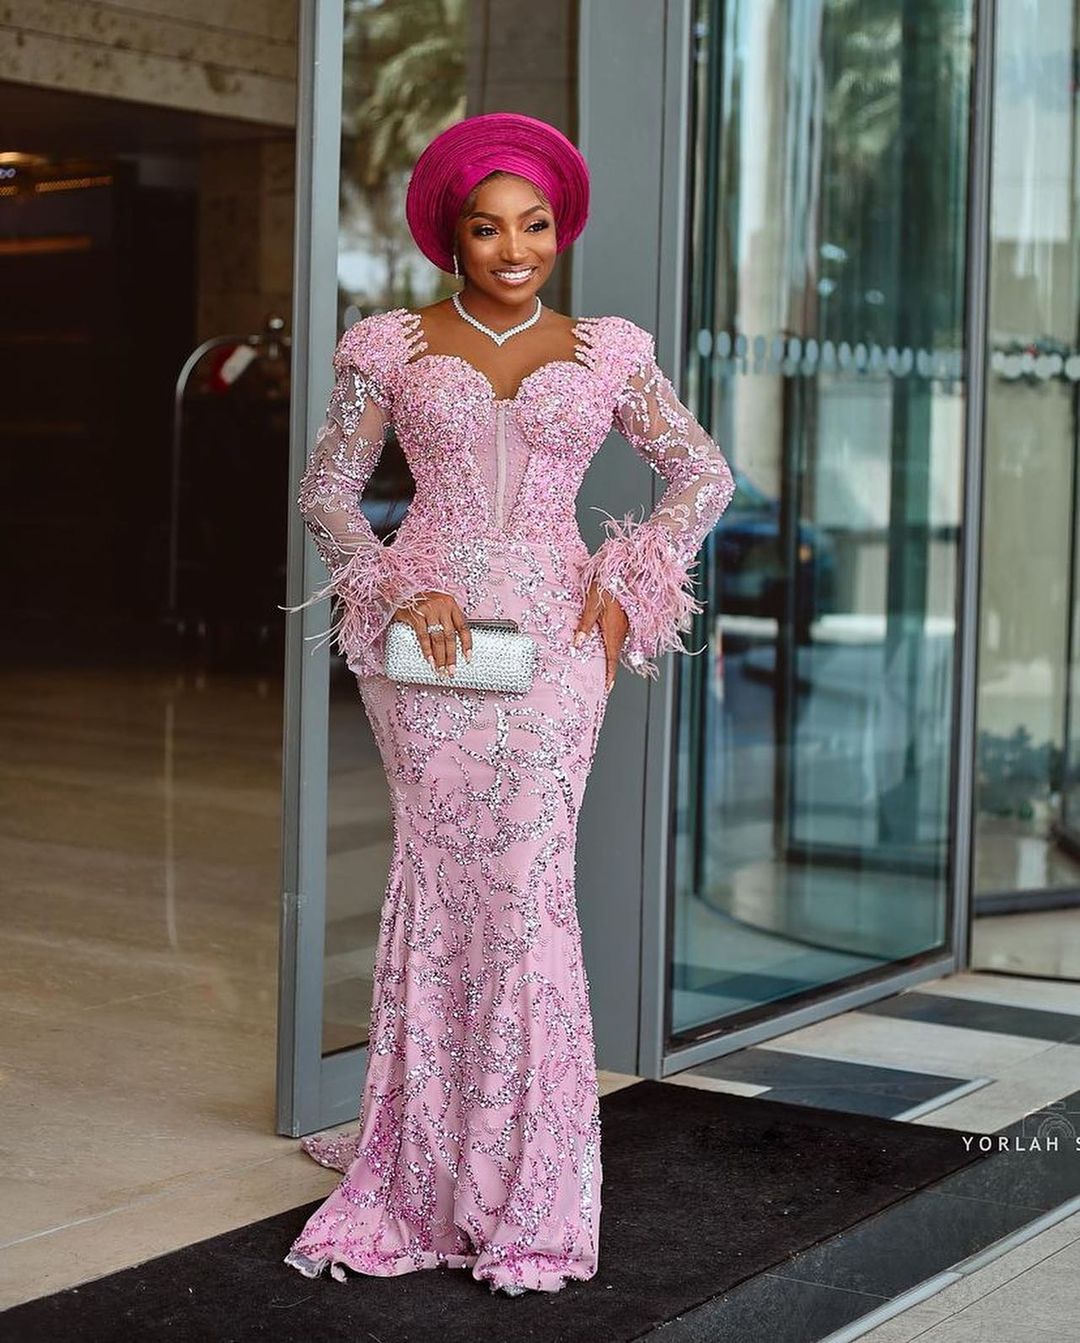 Nigerian Wedding: Aso Ebi Lace Styles You Should Rock in 2023